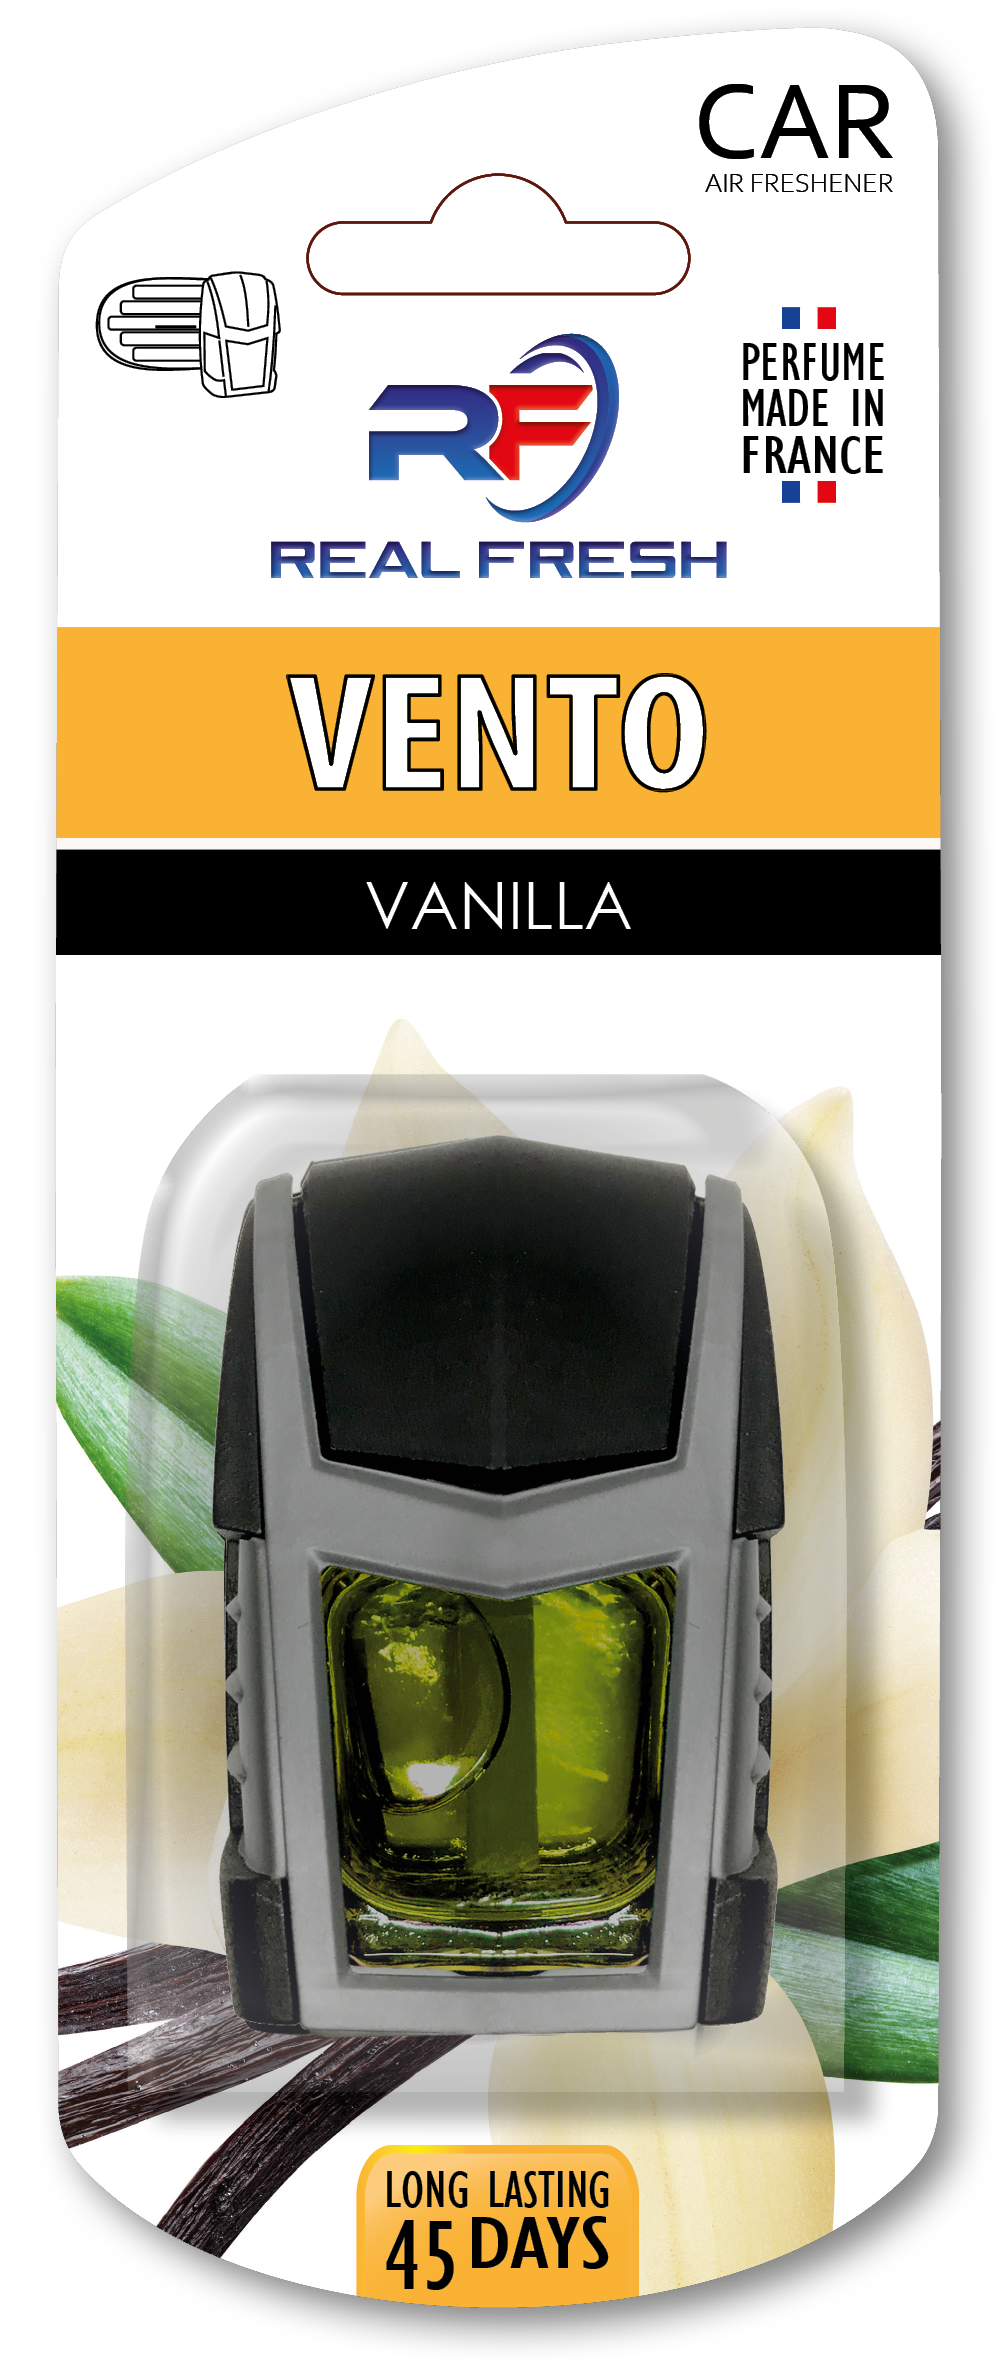 Vento Vanilla Image